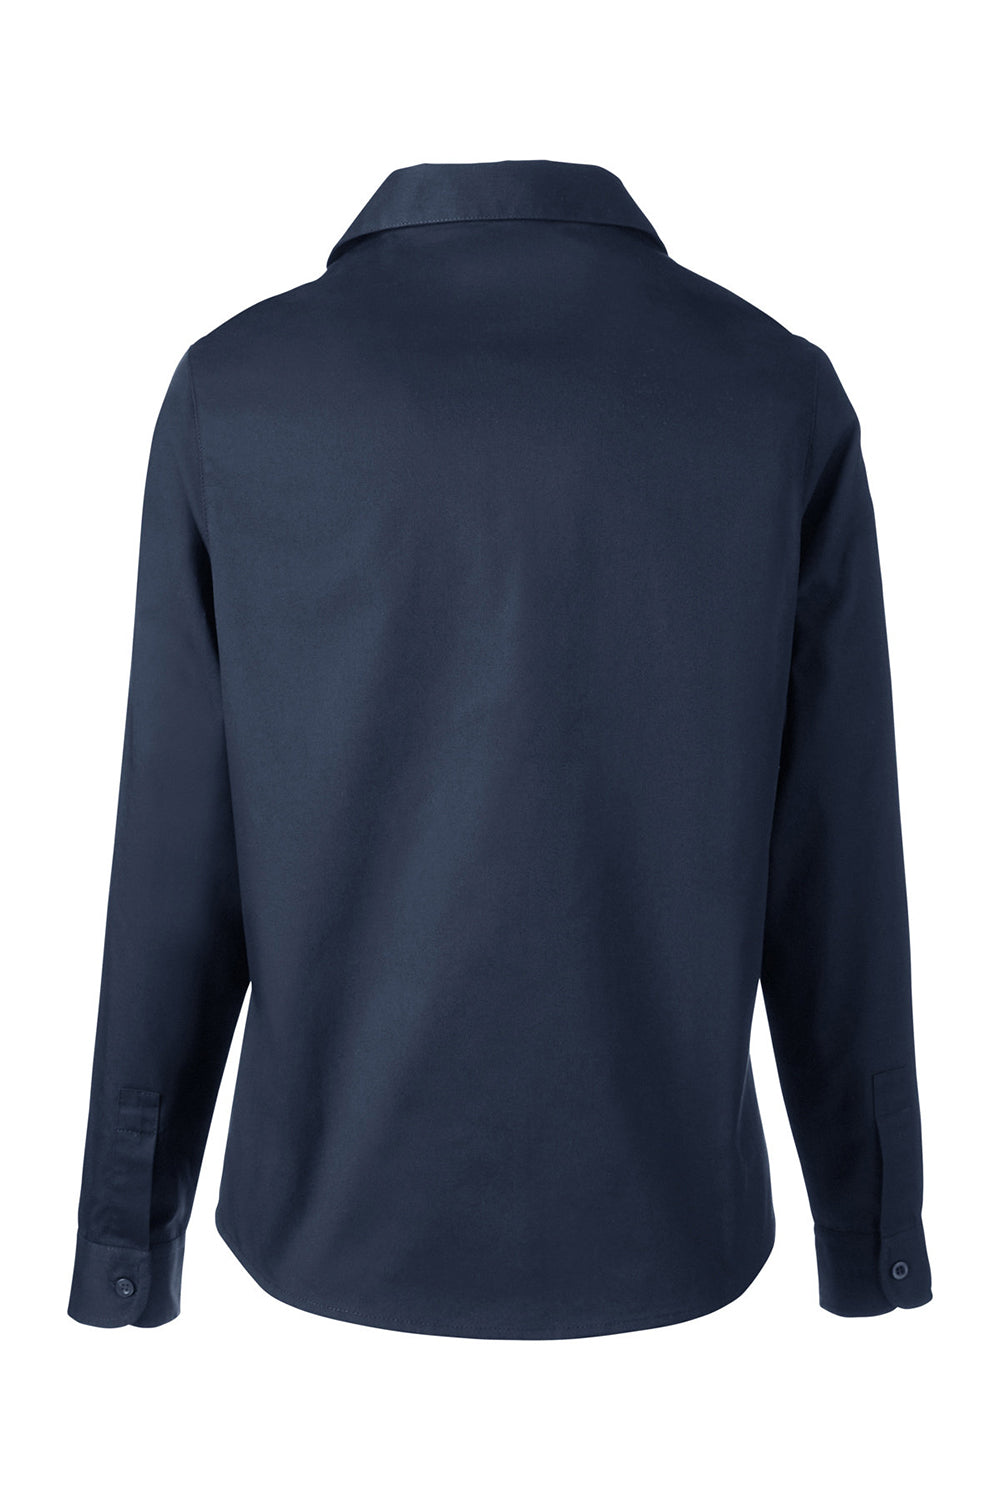 Harriton M585LW Womens Advantage Long Sleeve Button Down Shirt w/ Double Pockets Dark Navy Blue Flat Back